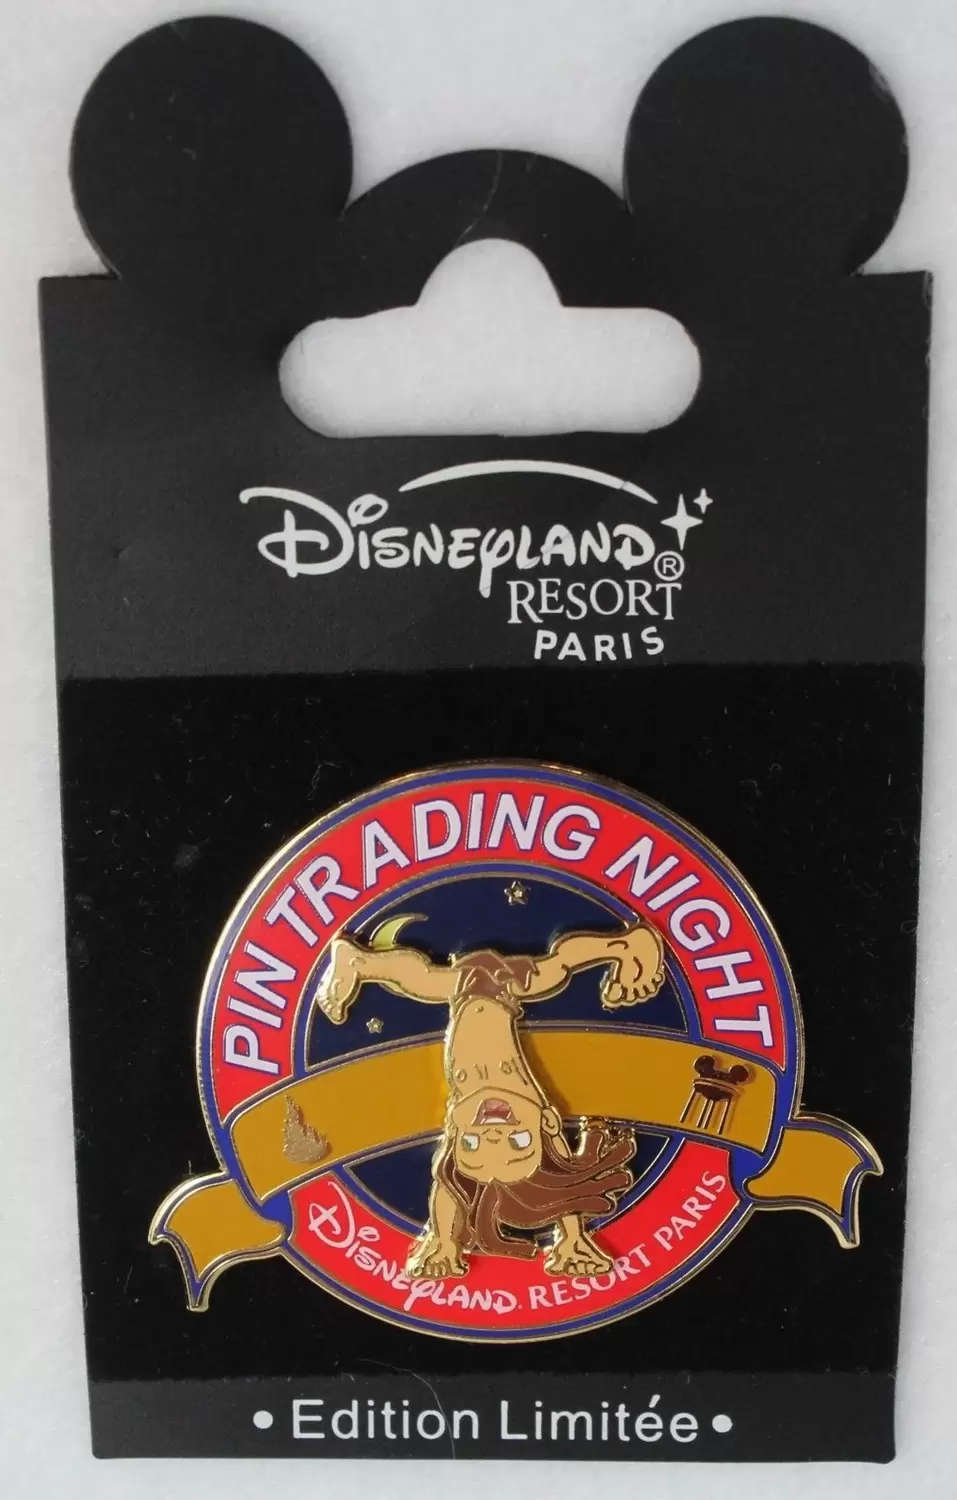 Disney - Pin Trading Night - Young Tarzan